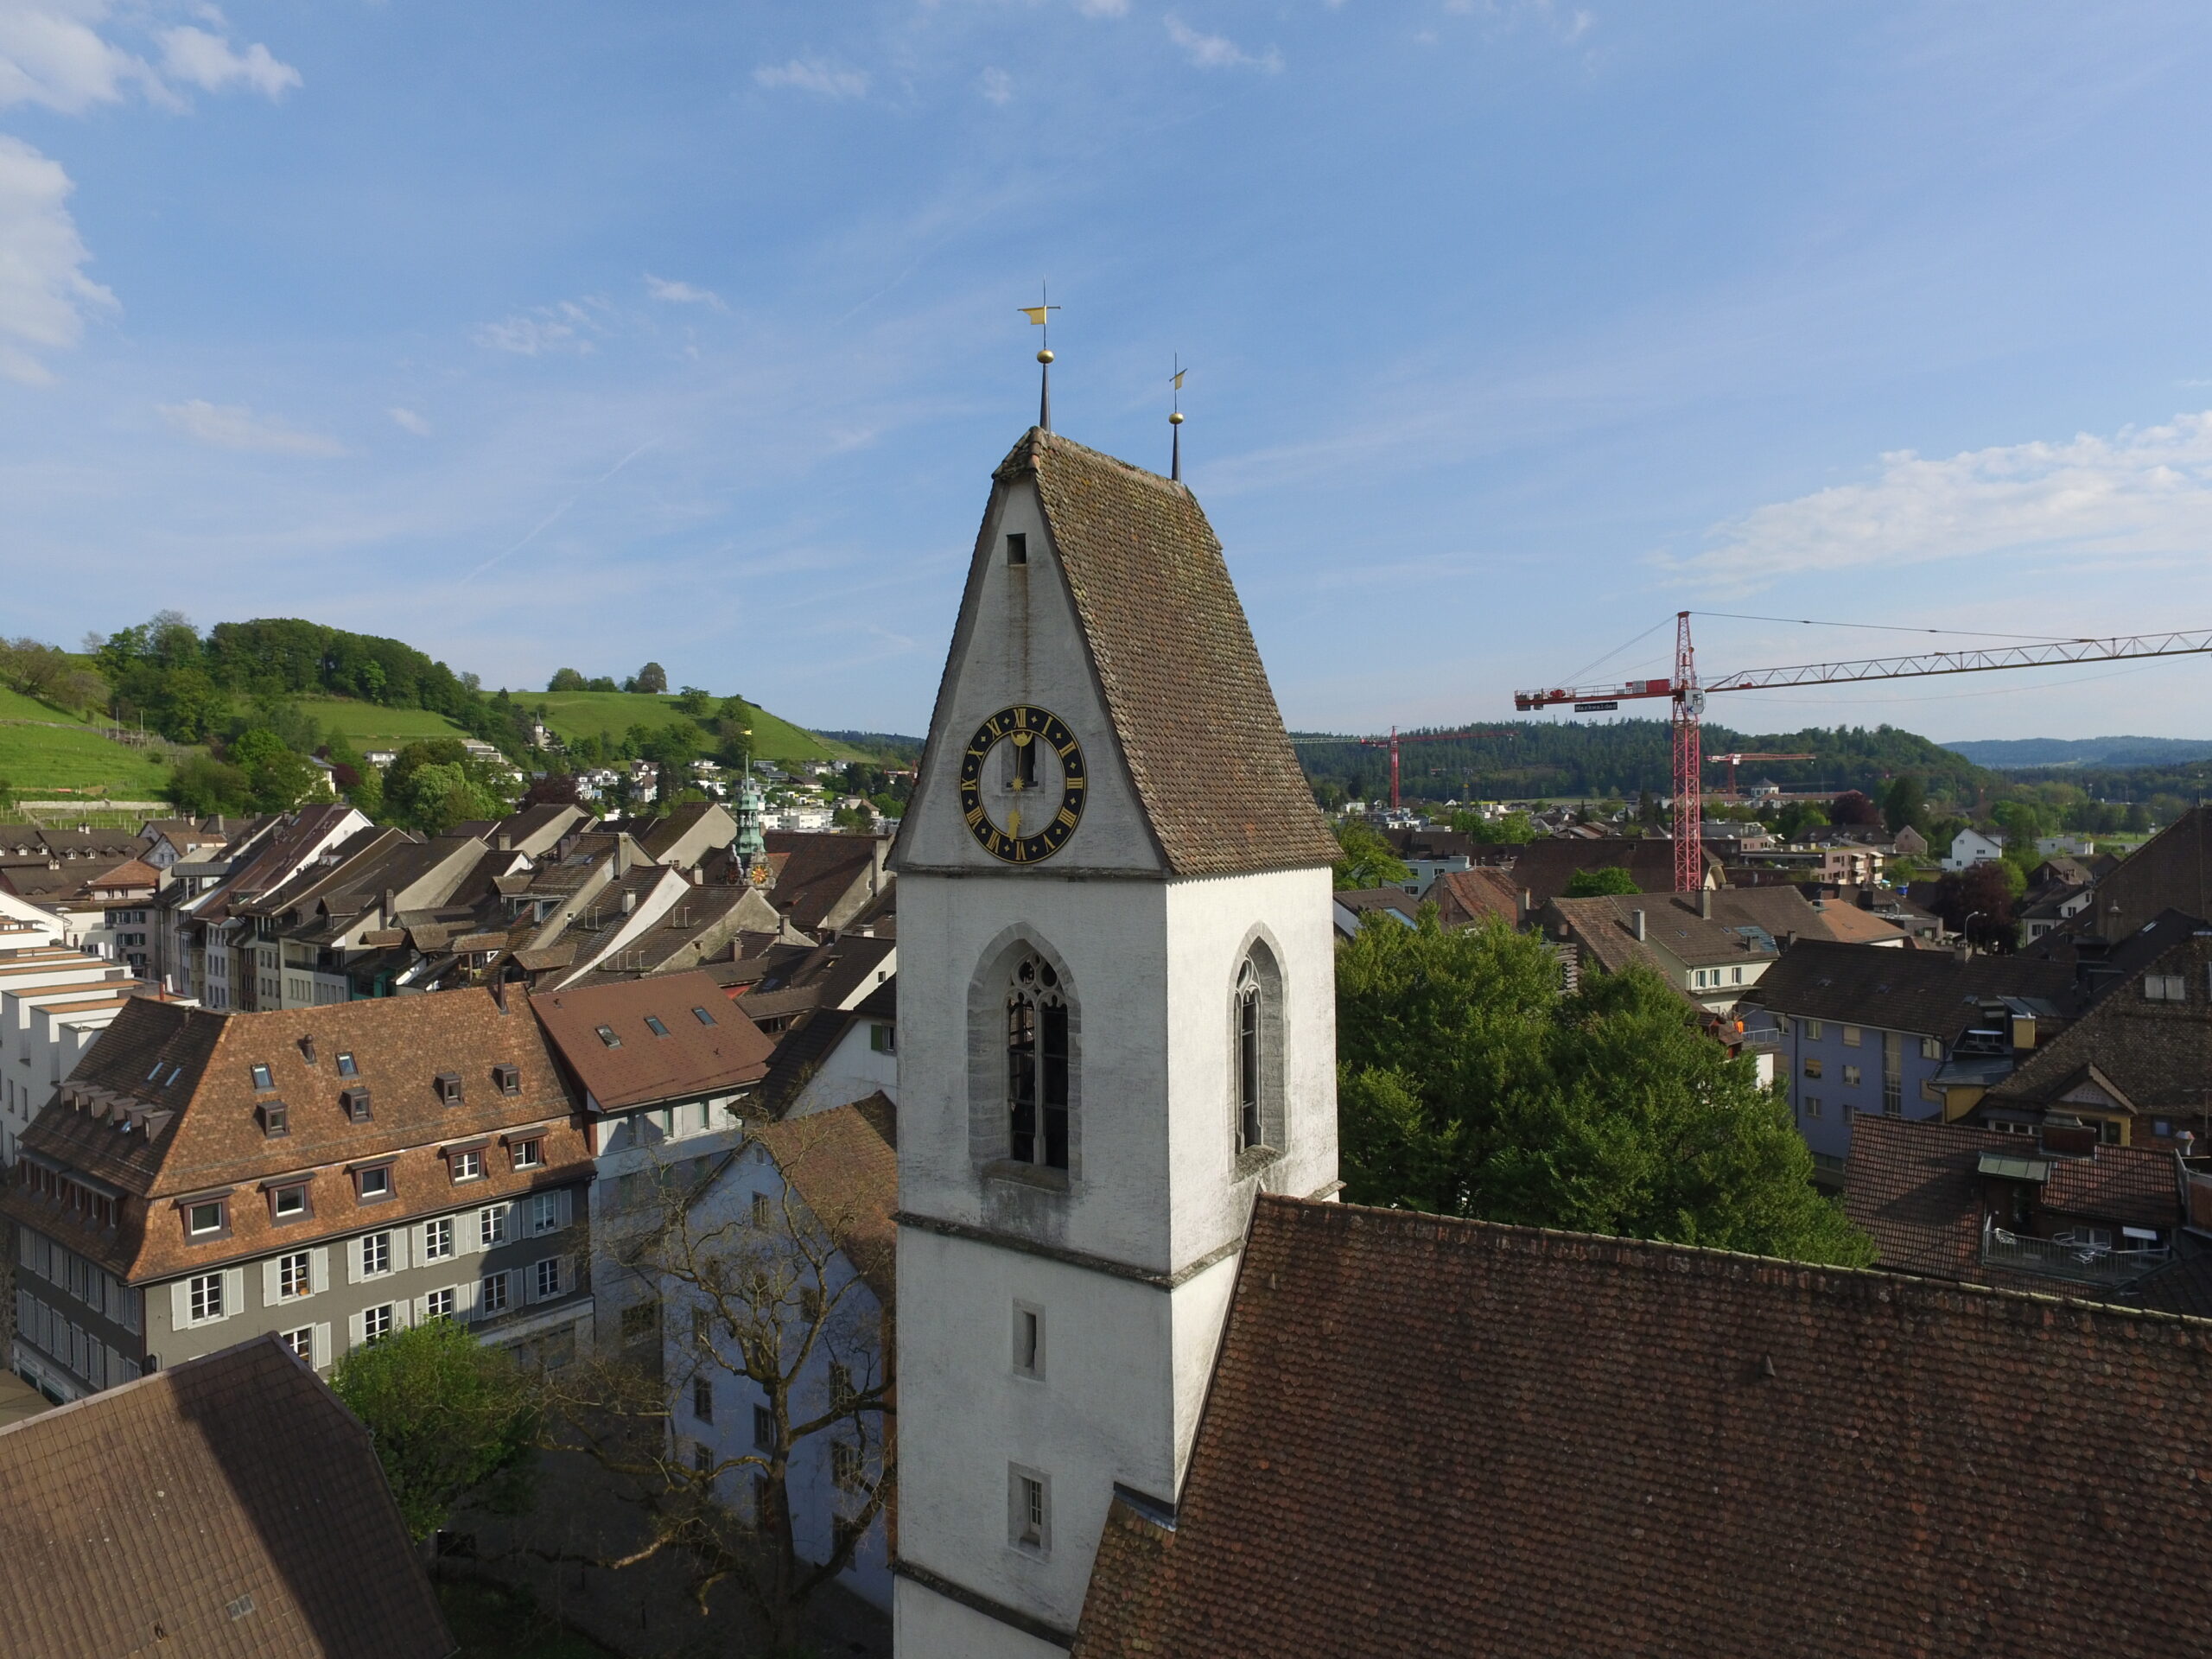 Ref. Stadtkirche Lenzburg